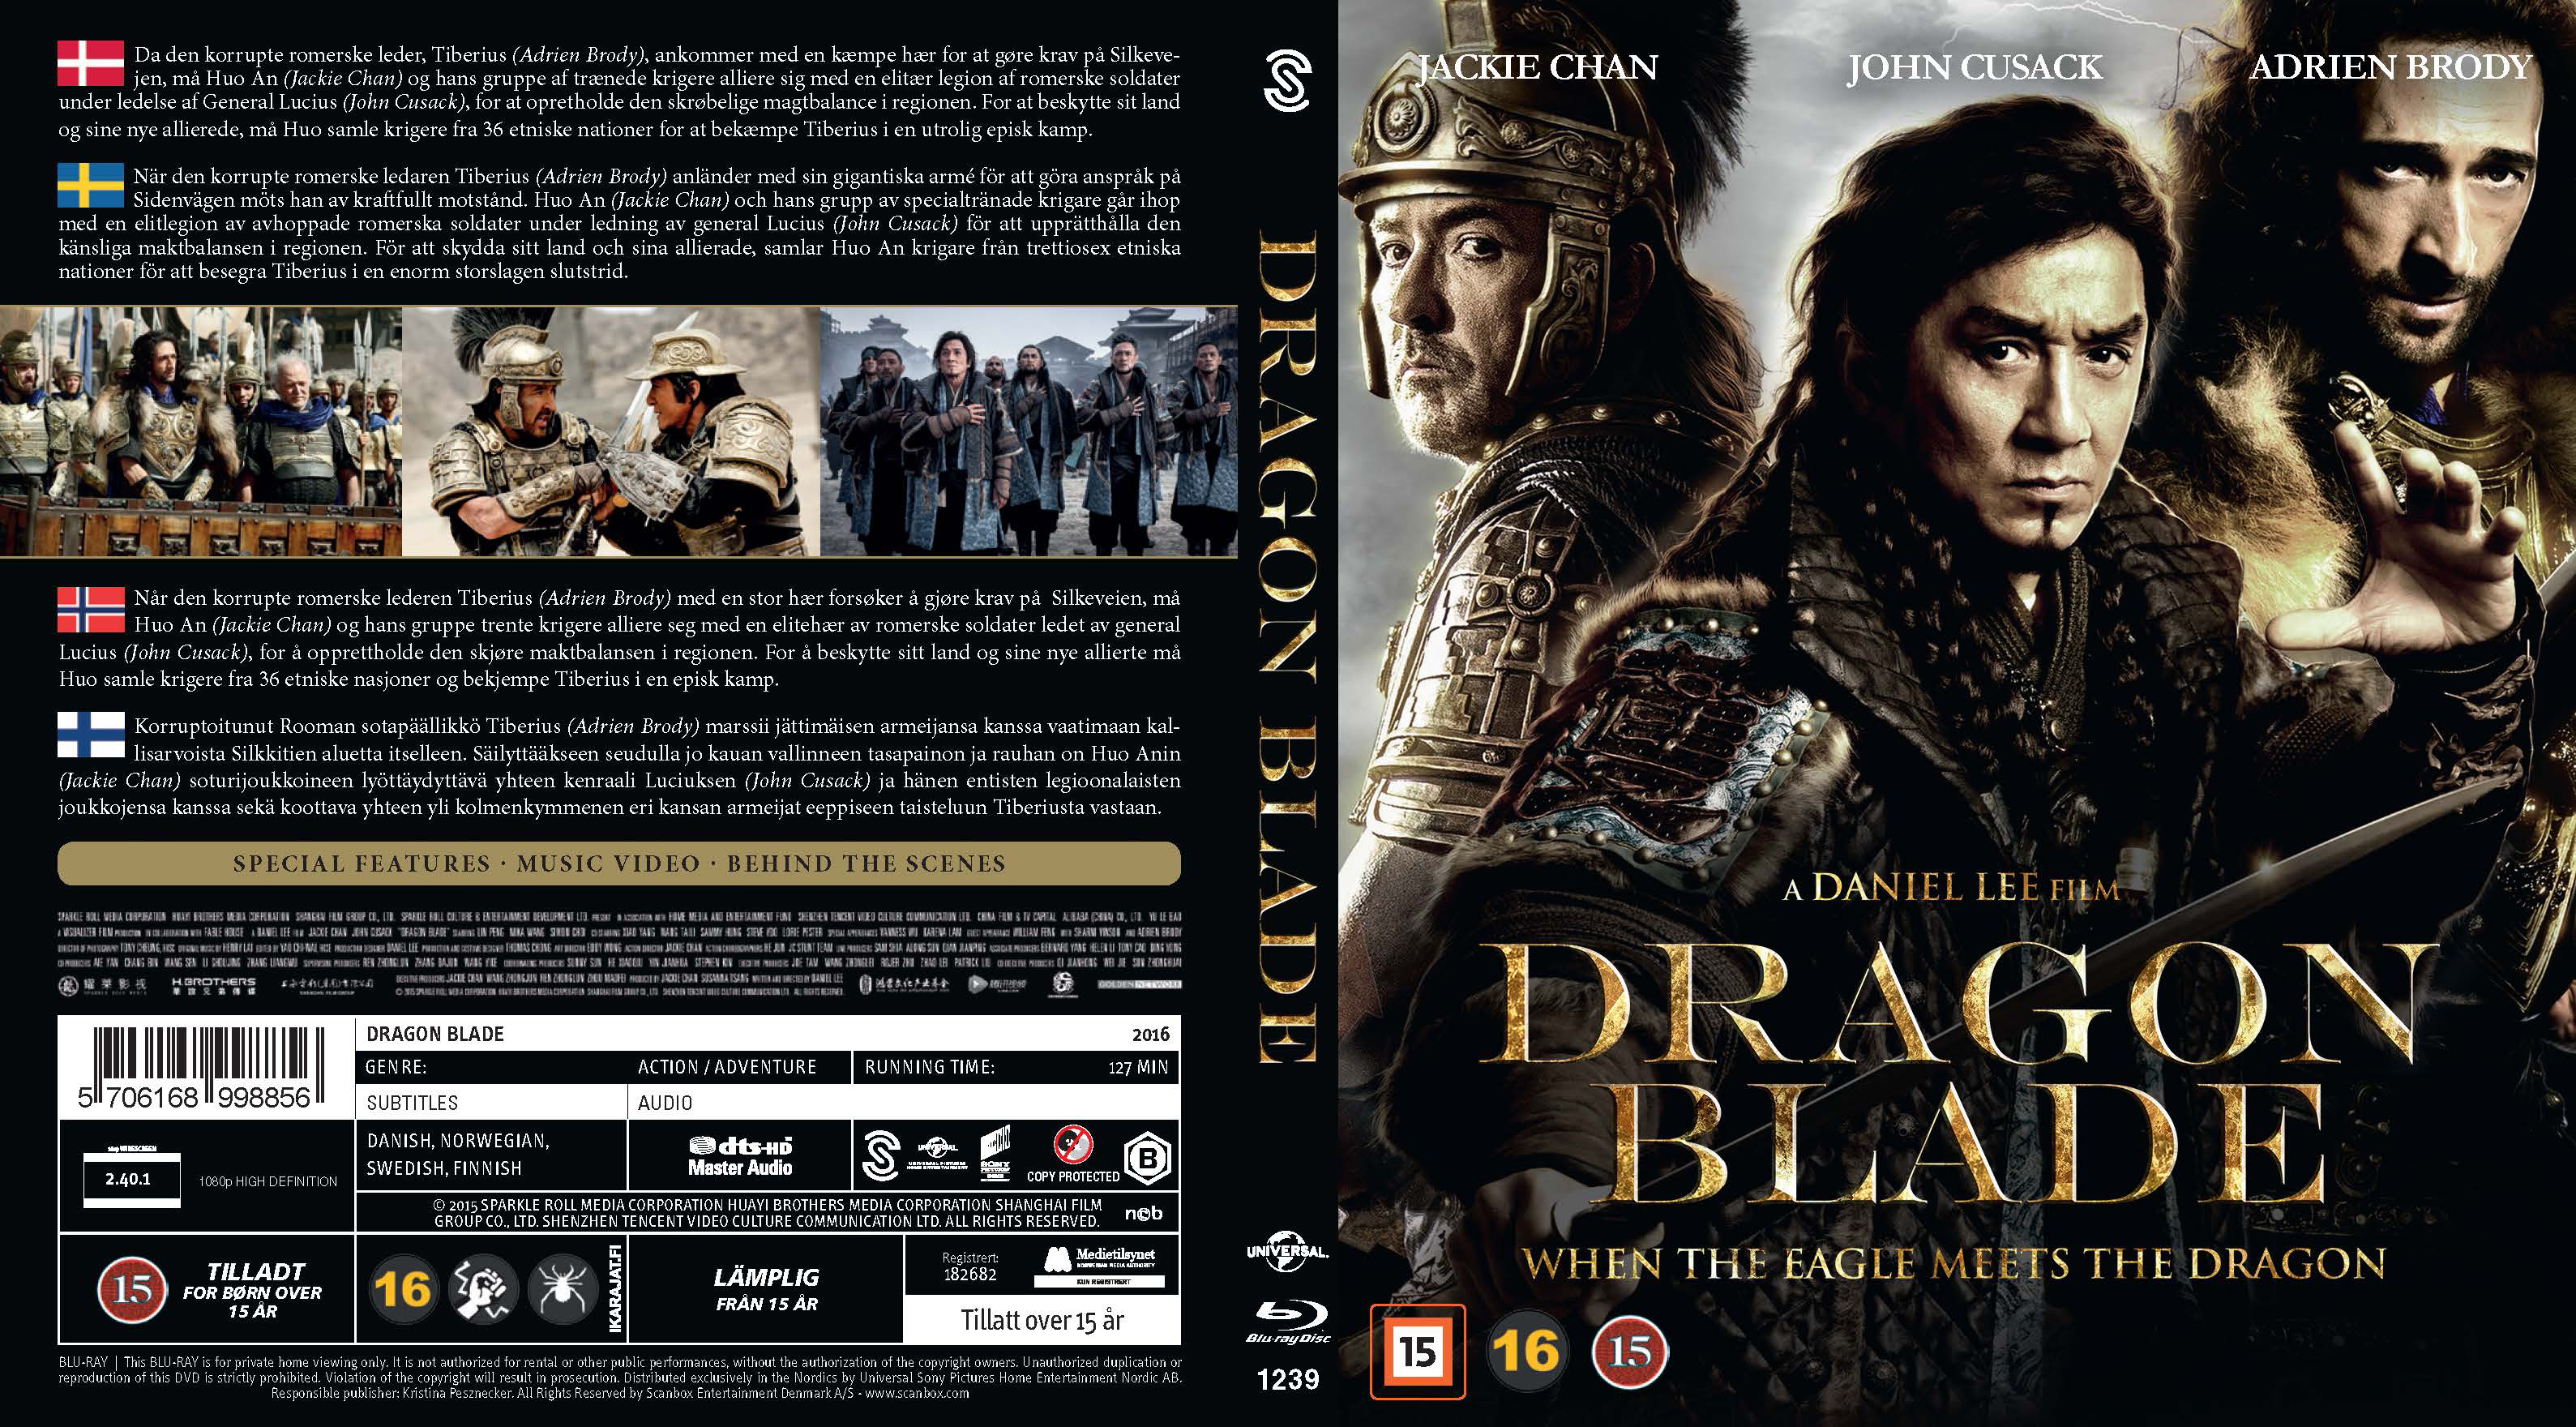 Dragon Blade: The Beginning [DVD] [2005] [UK Import]